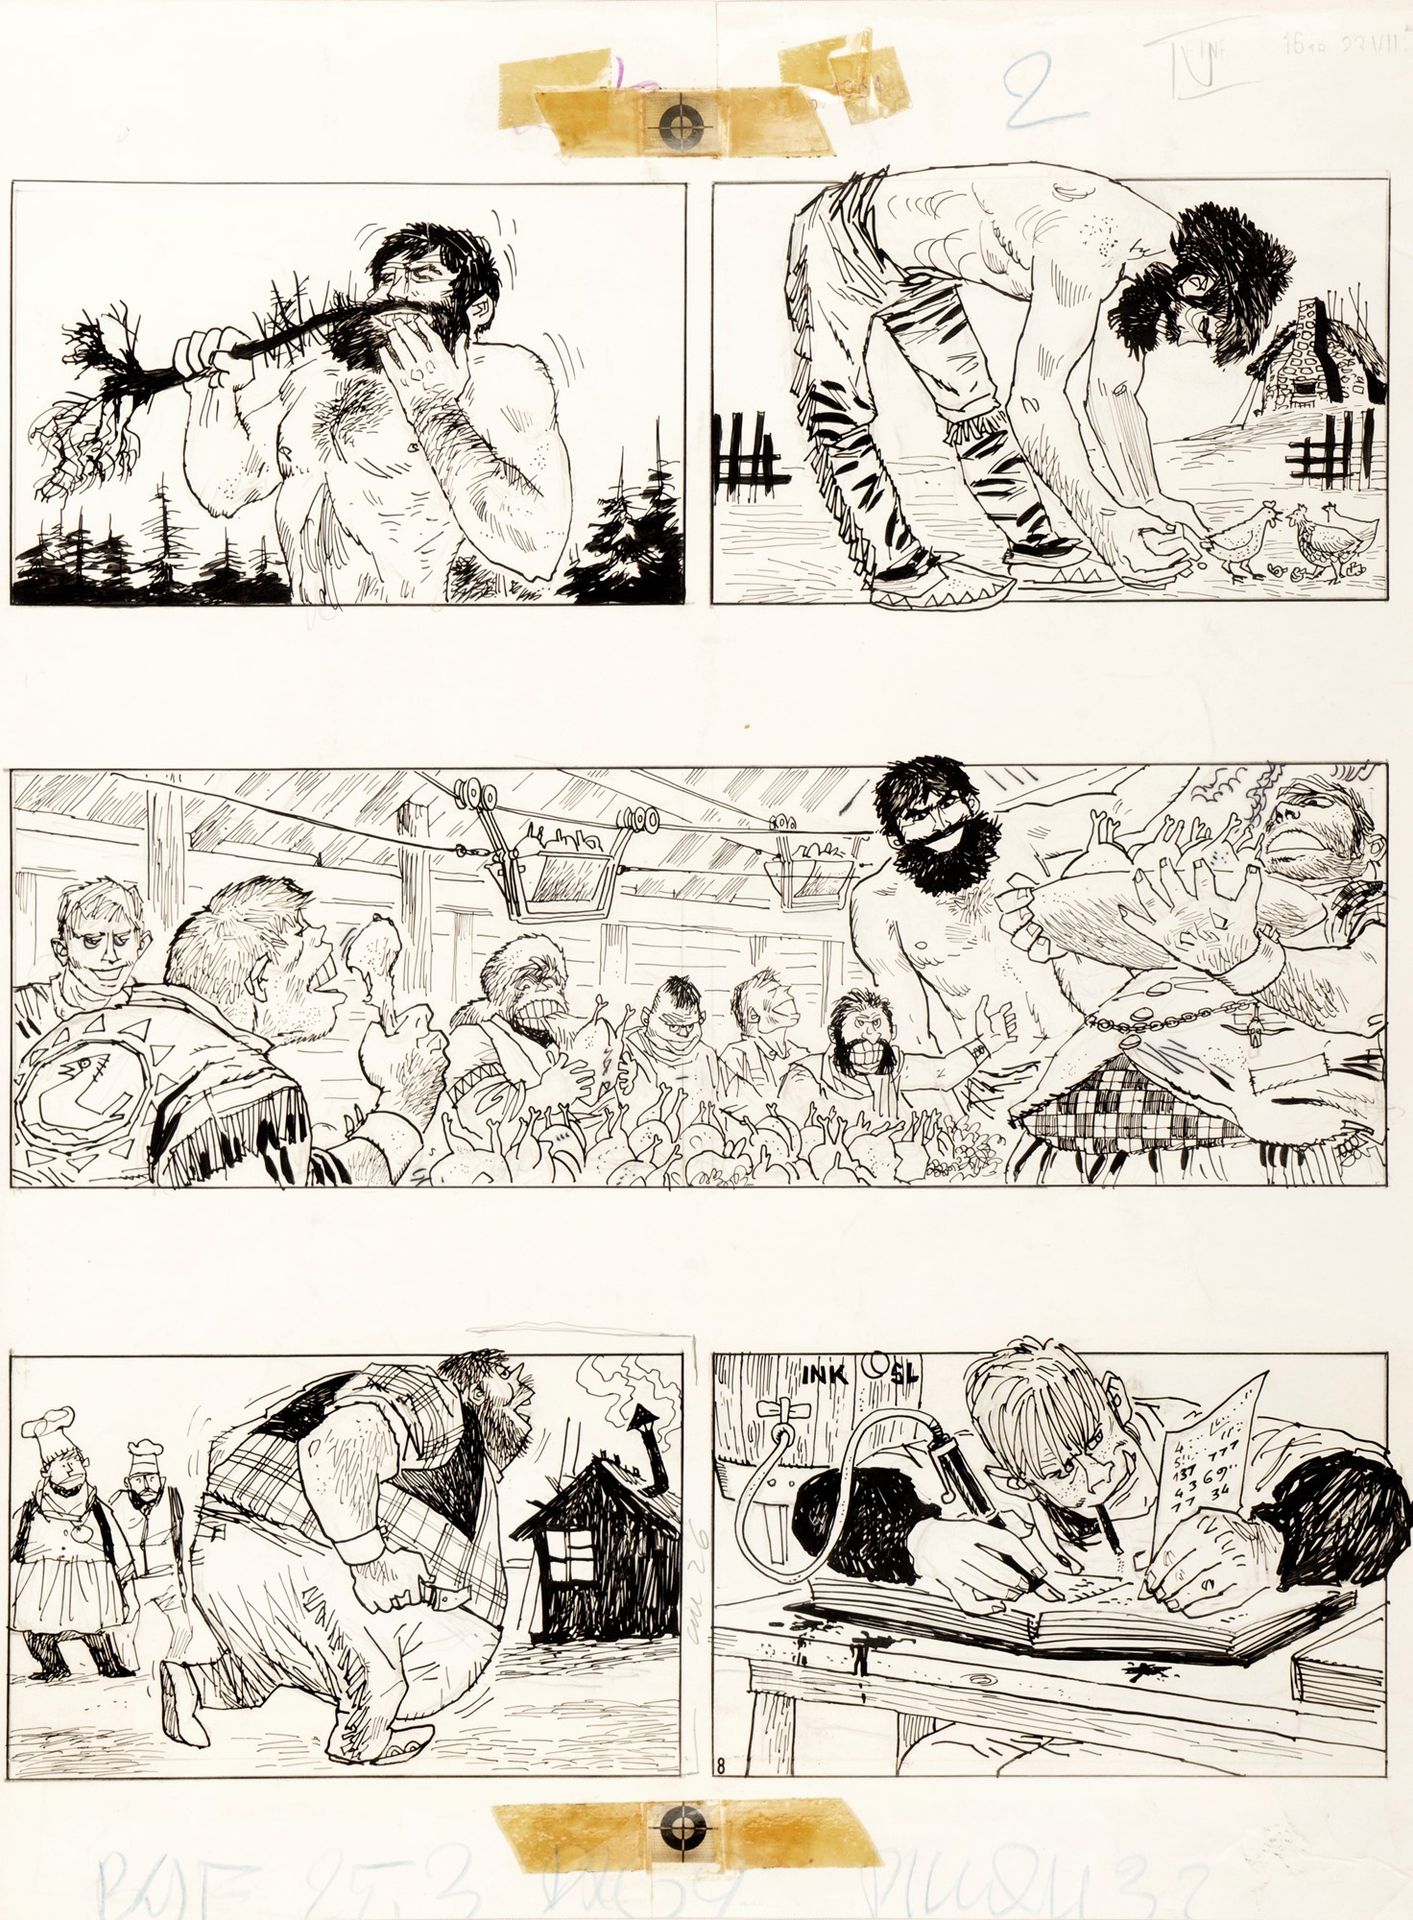 HUGO PRATT Il favoloso West: I gigantiburloni, 1964

Lápiz y tinta sobre cartuli&hellip;